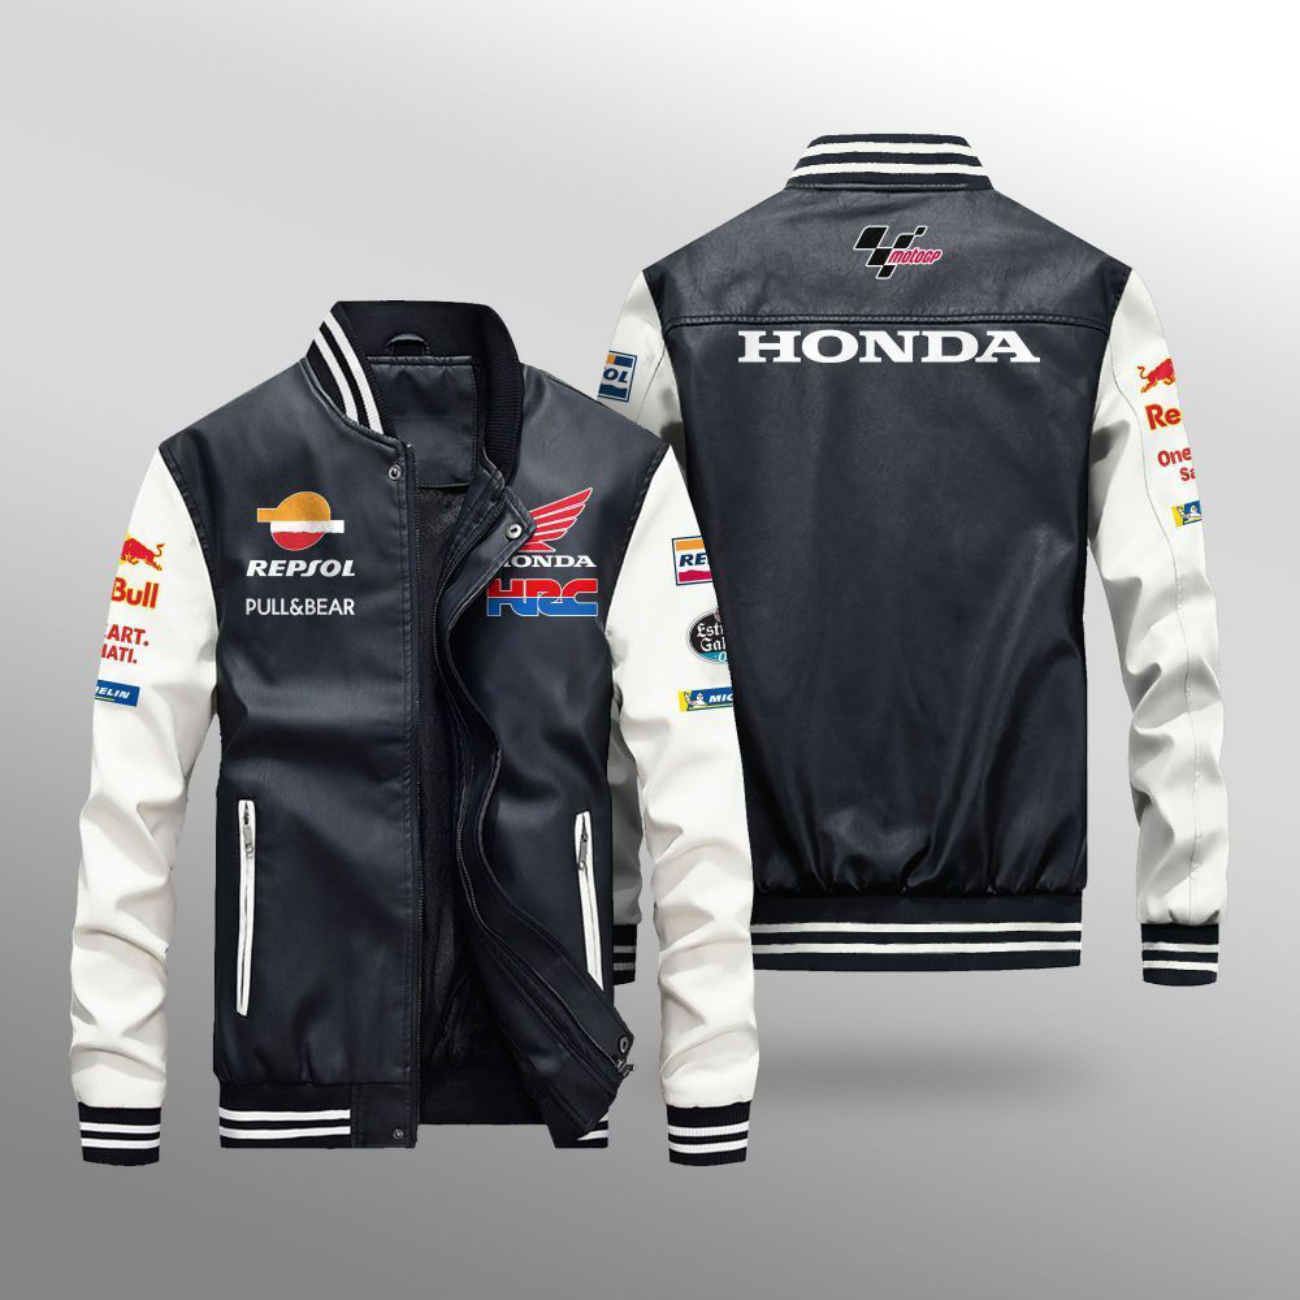 Honda Jackets Honda Team Leather Bomber Jackets On Sale - Vascara